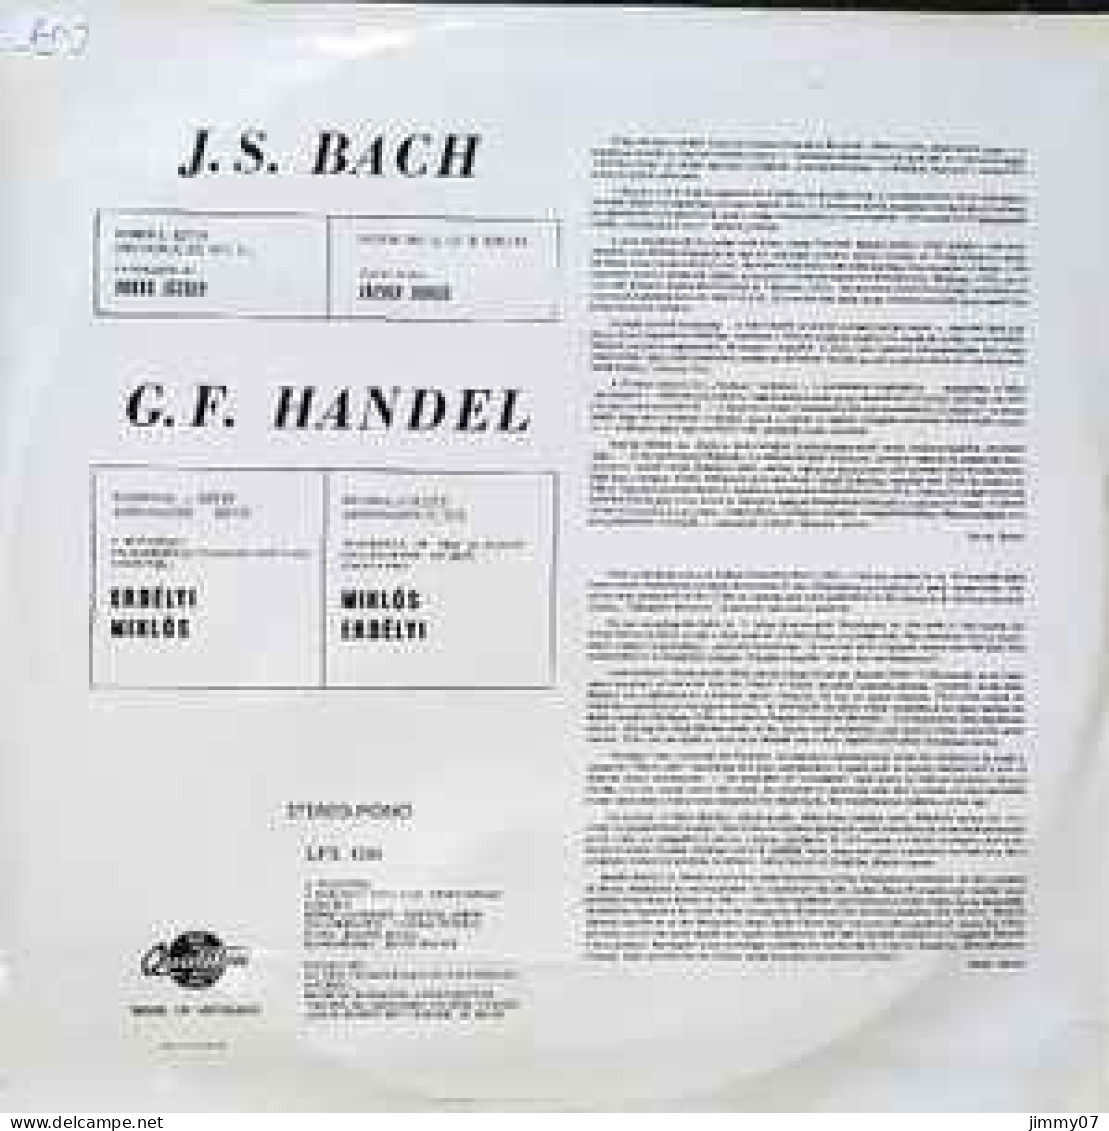 J. S. Bach/Handel -Miklós Erdélyi, József Juhos - Suite No. 2 In B Minor / Rodrigo Suite - Ariodante Suite (LP) - Klassiekers